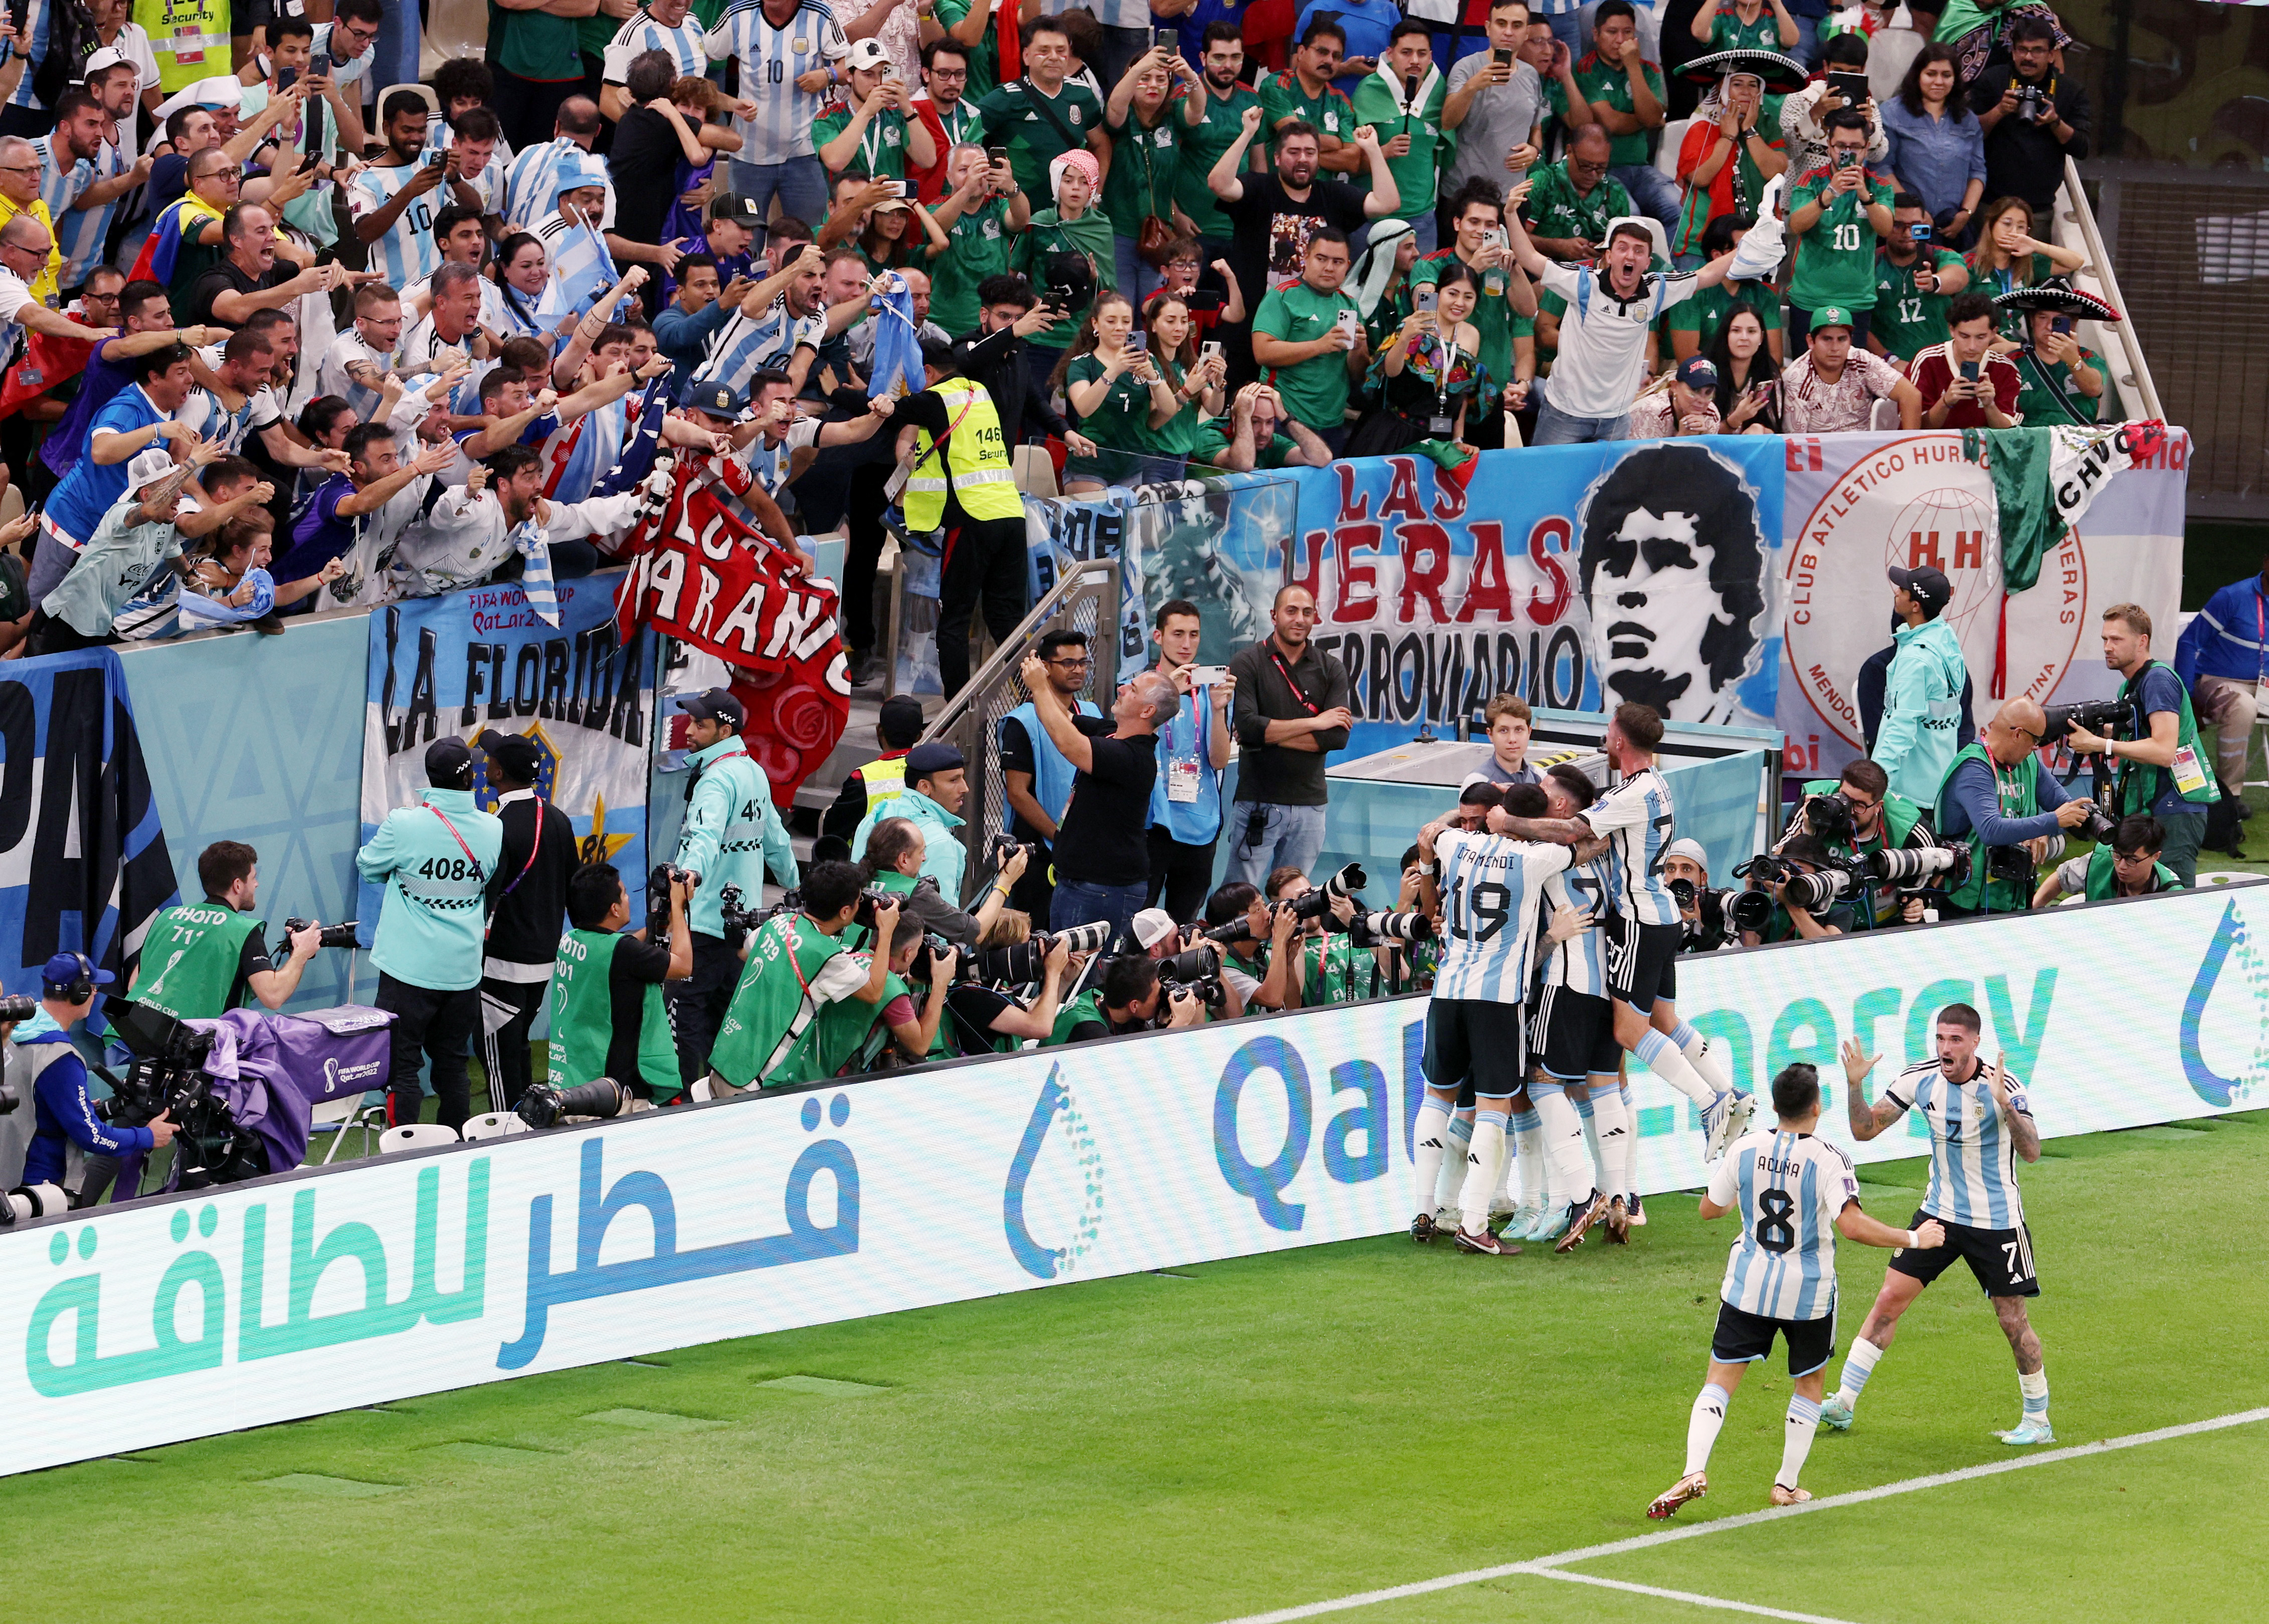 El gol de Messi desató la euforia de los fanáticos (Reuters/Molly Darlington)